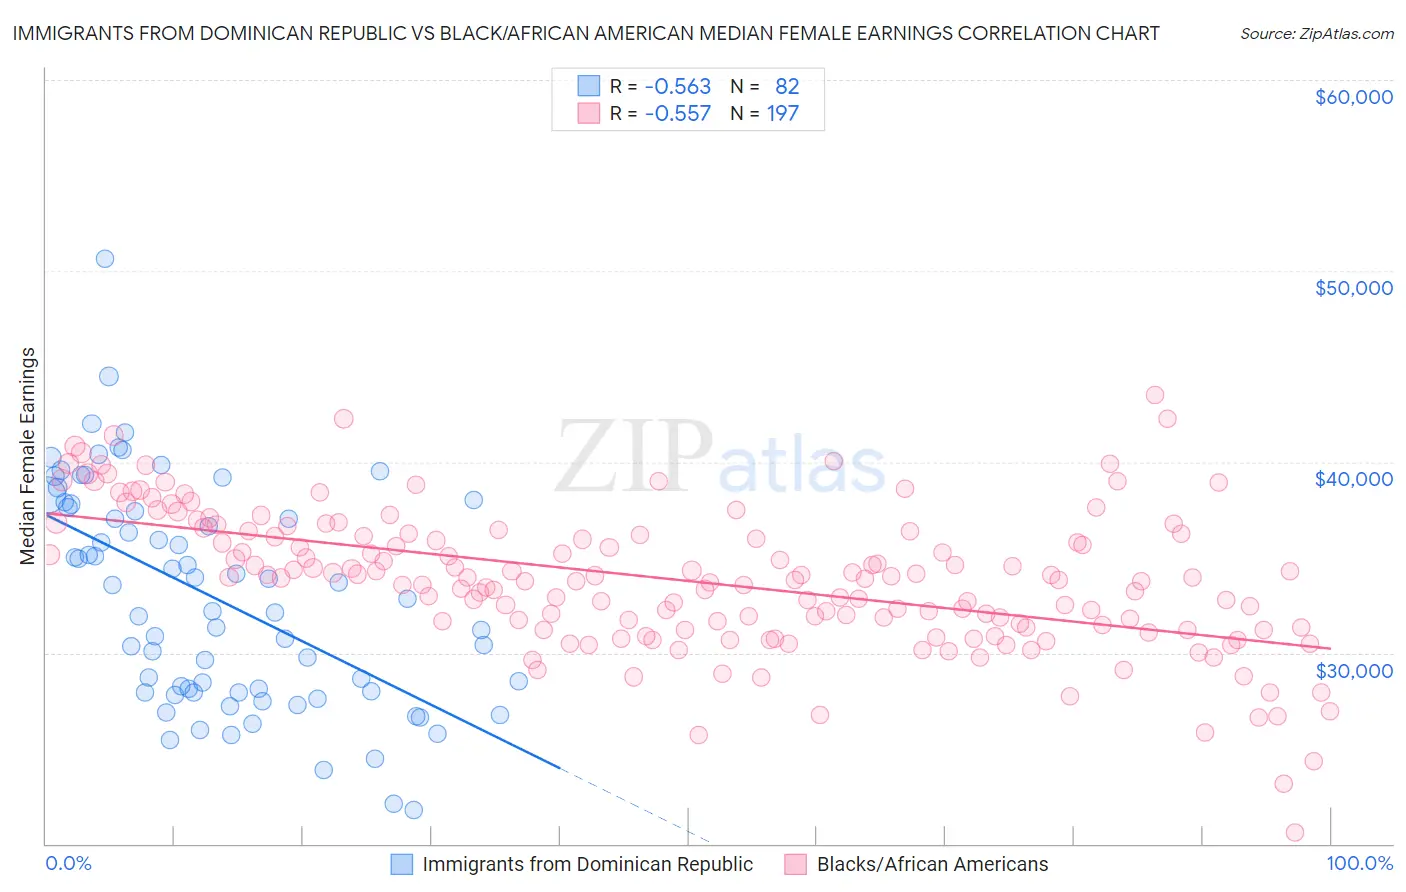 Immigrants from Dominican Republic vs Black/African American Median Female Earnings